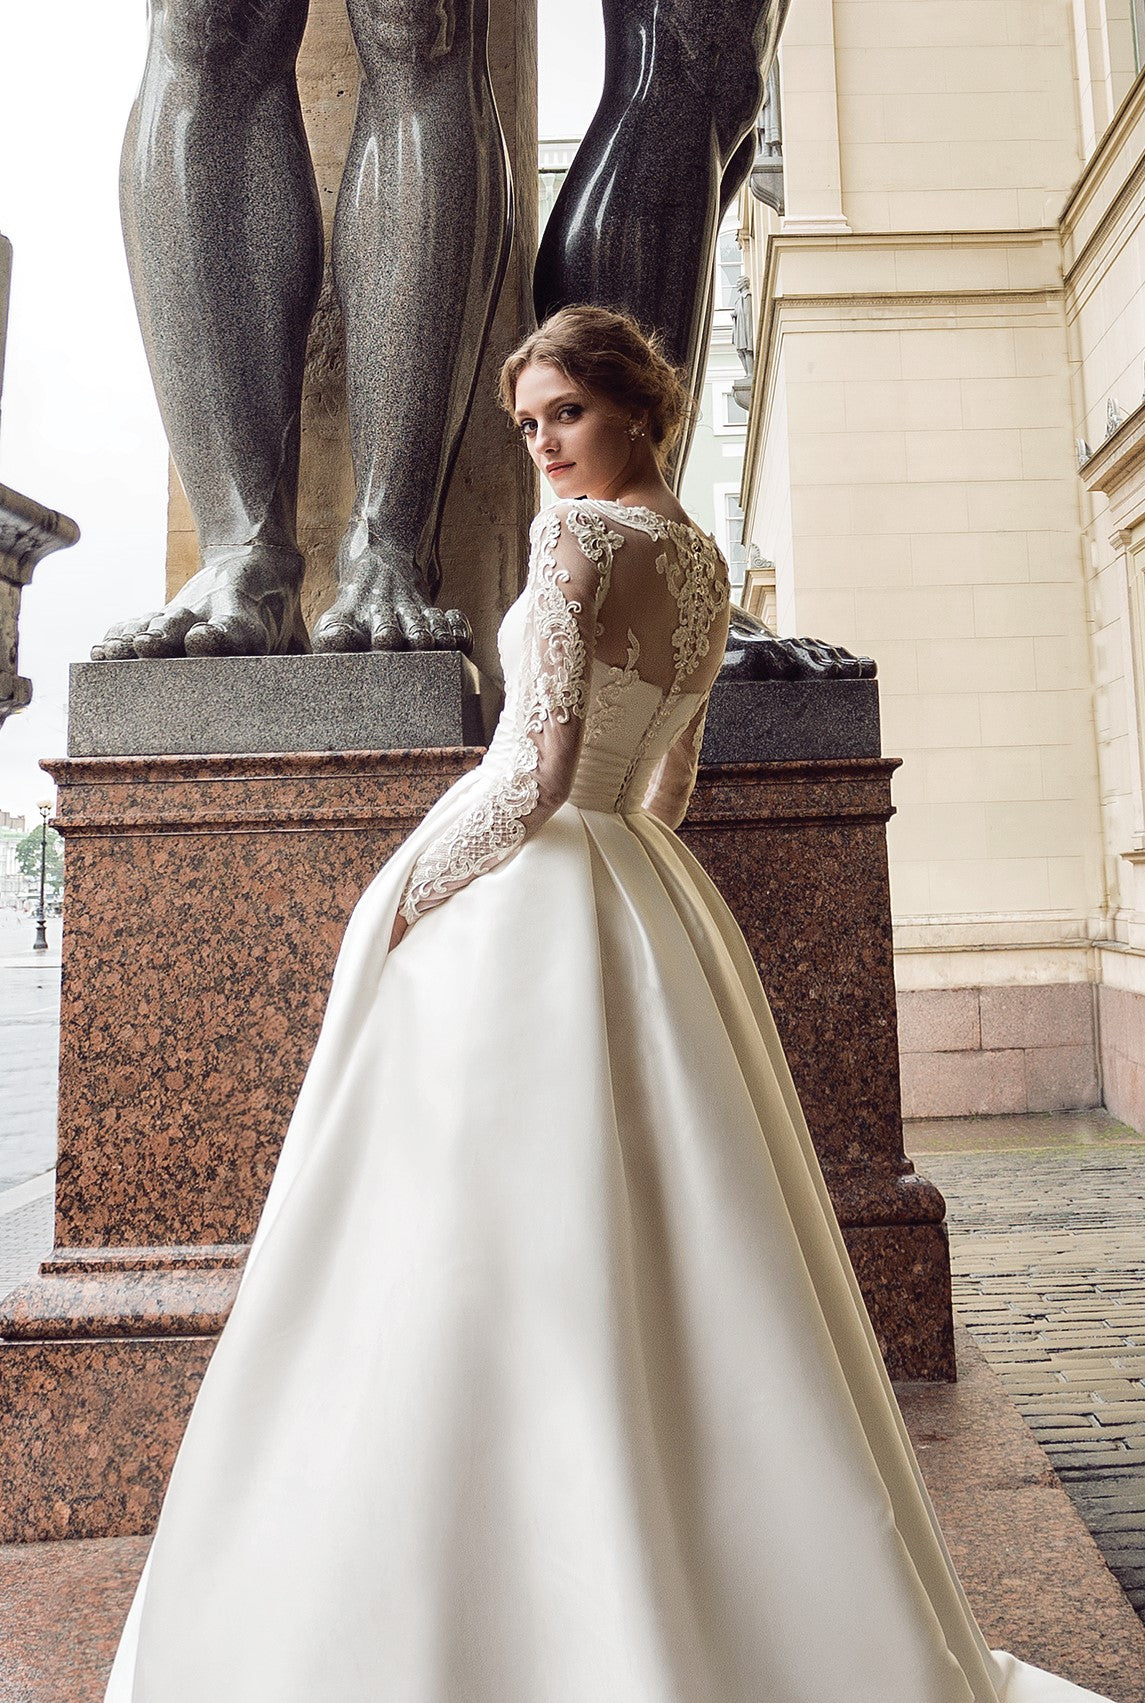 From Romantic Wedding Dresses to Fashion-Forward Evening Gowns | Elegant  wedding dress, Stylish wedding dresses, Classy wedding dress